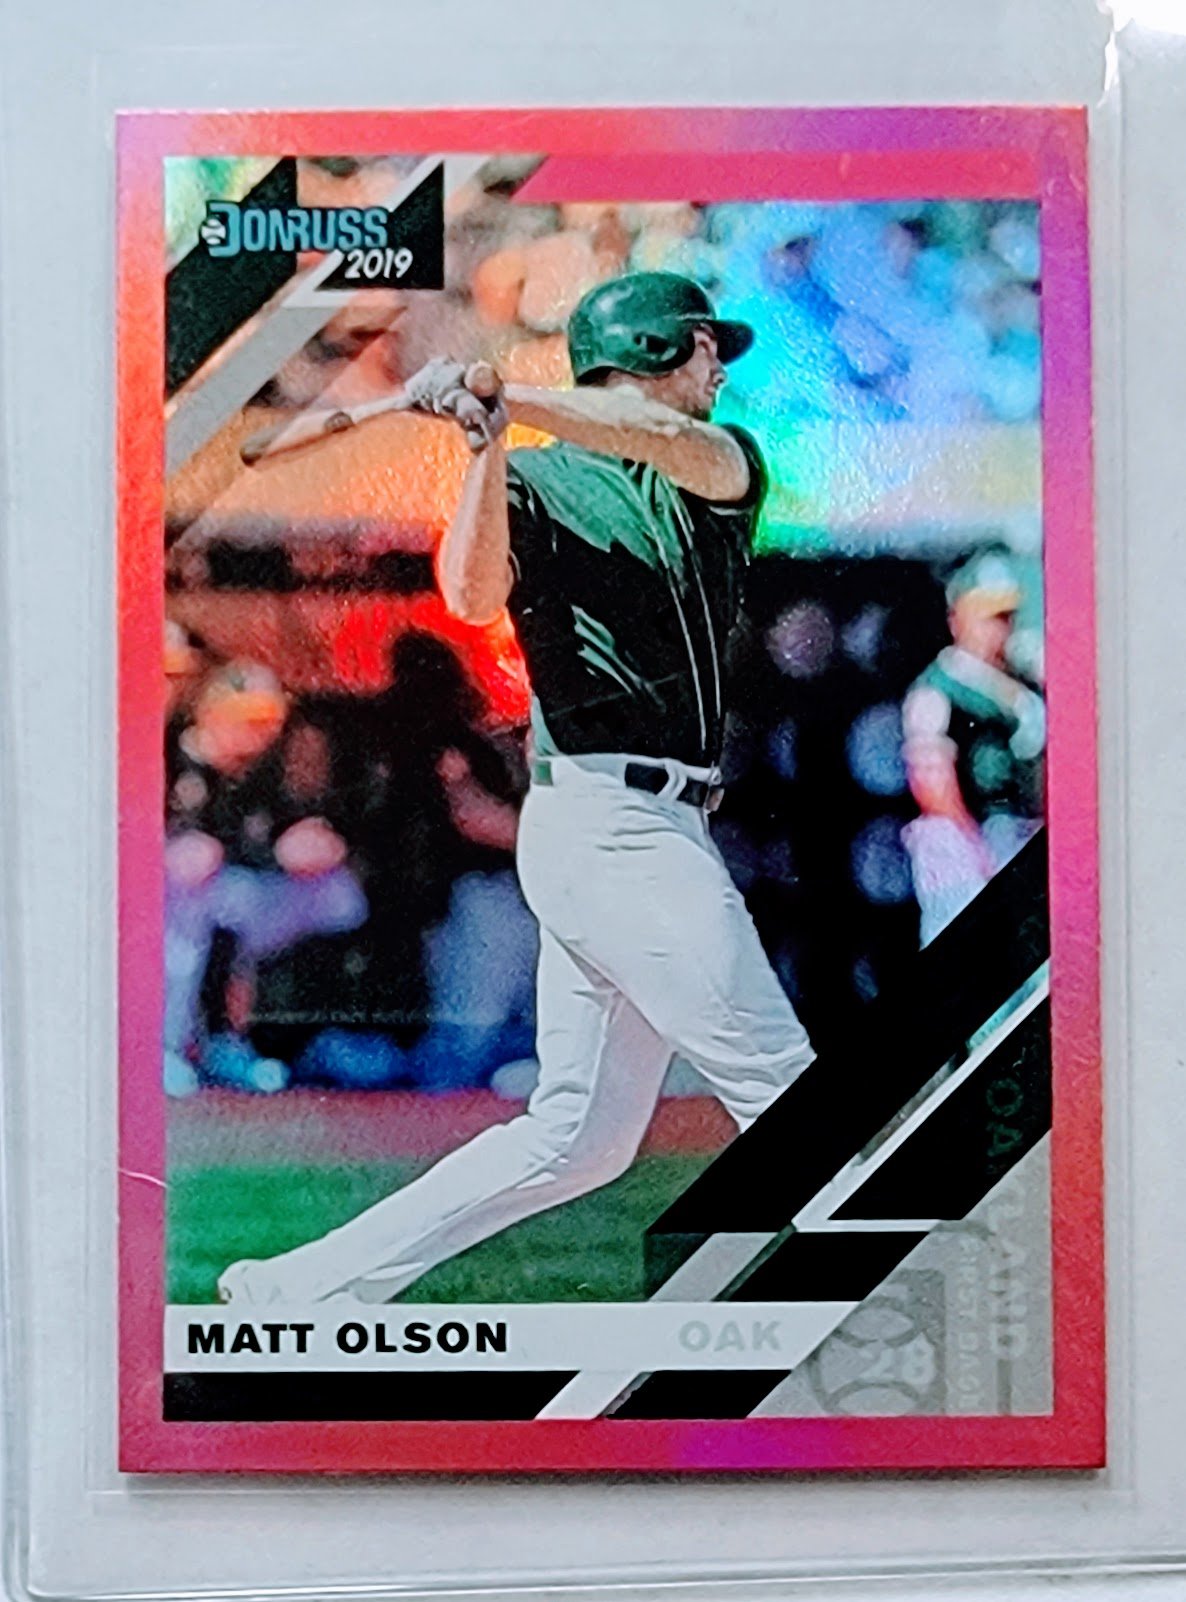 2019 Donruss Matt Olson Pink Refractor Baseball Card TPTV simple Xclusive Collectibles   